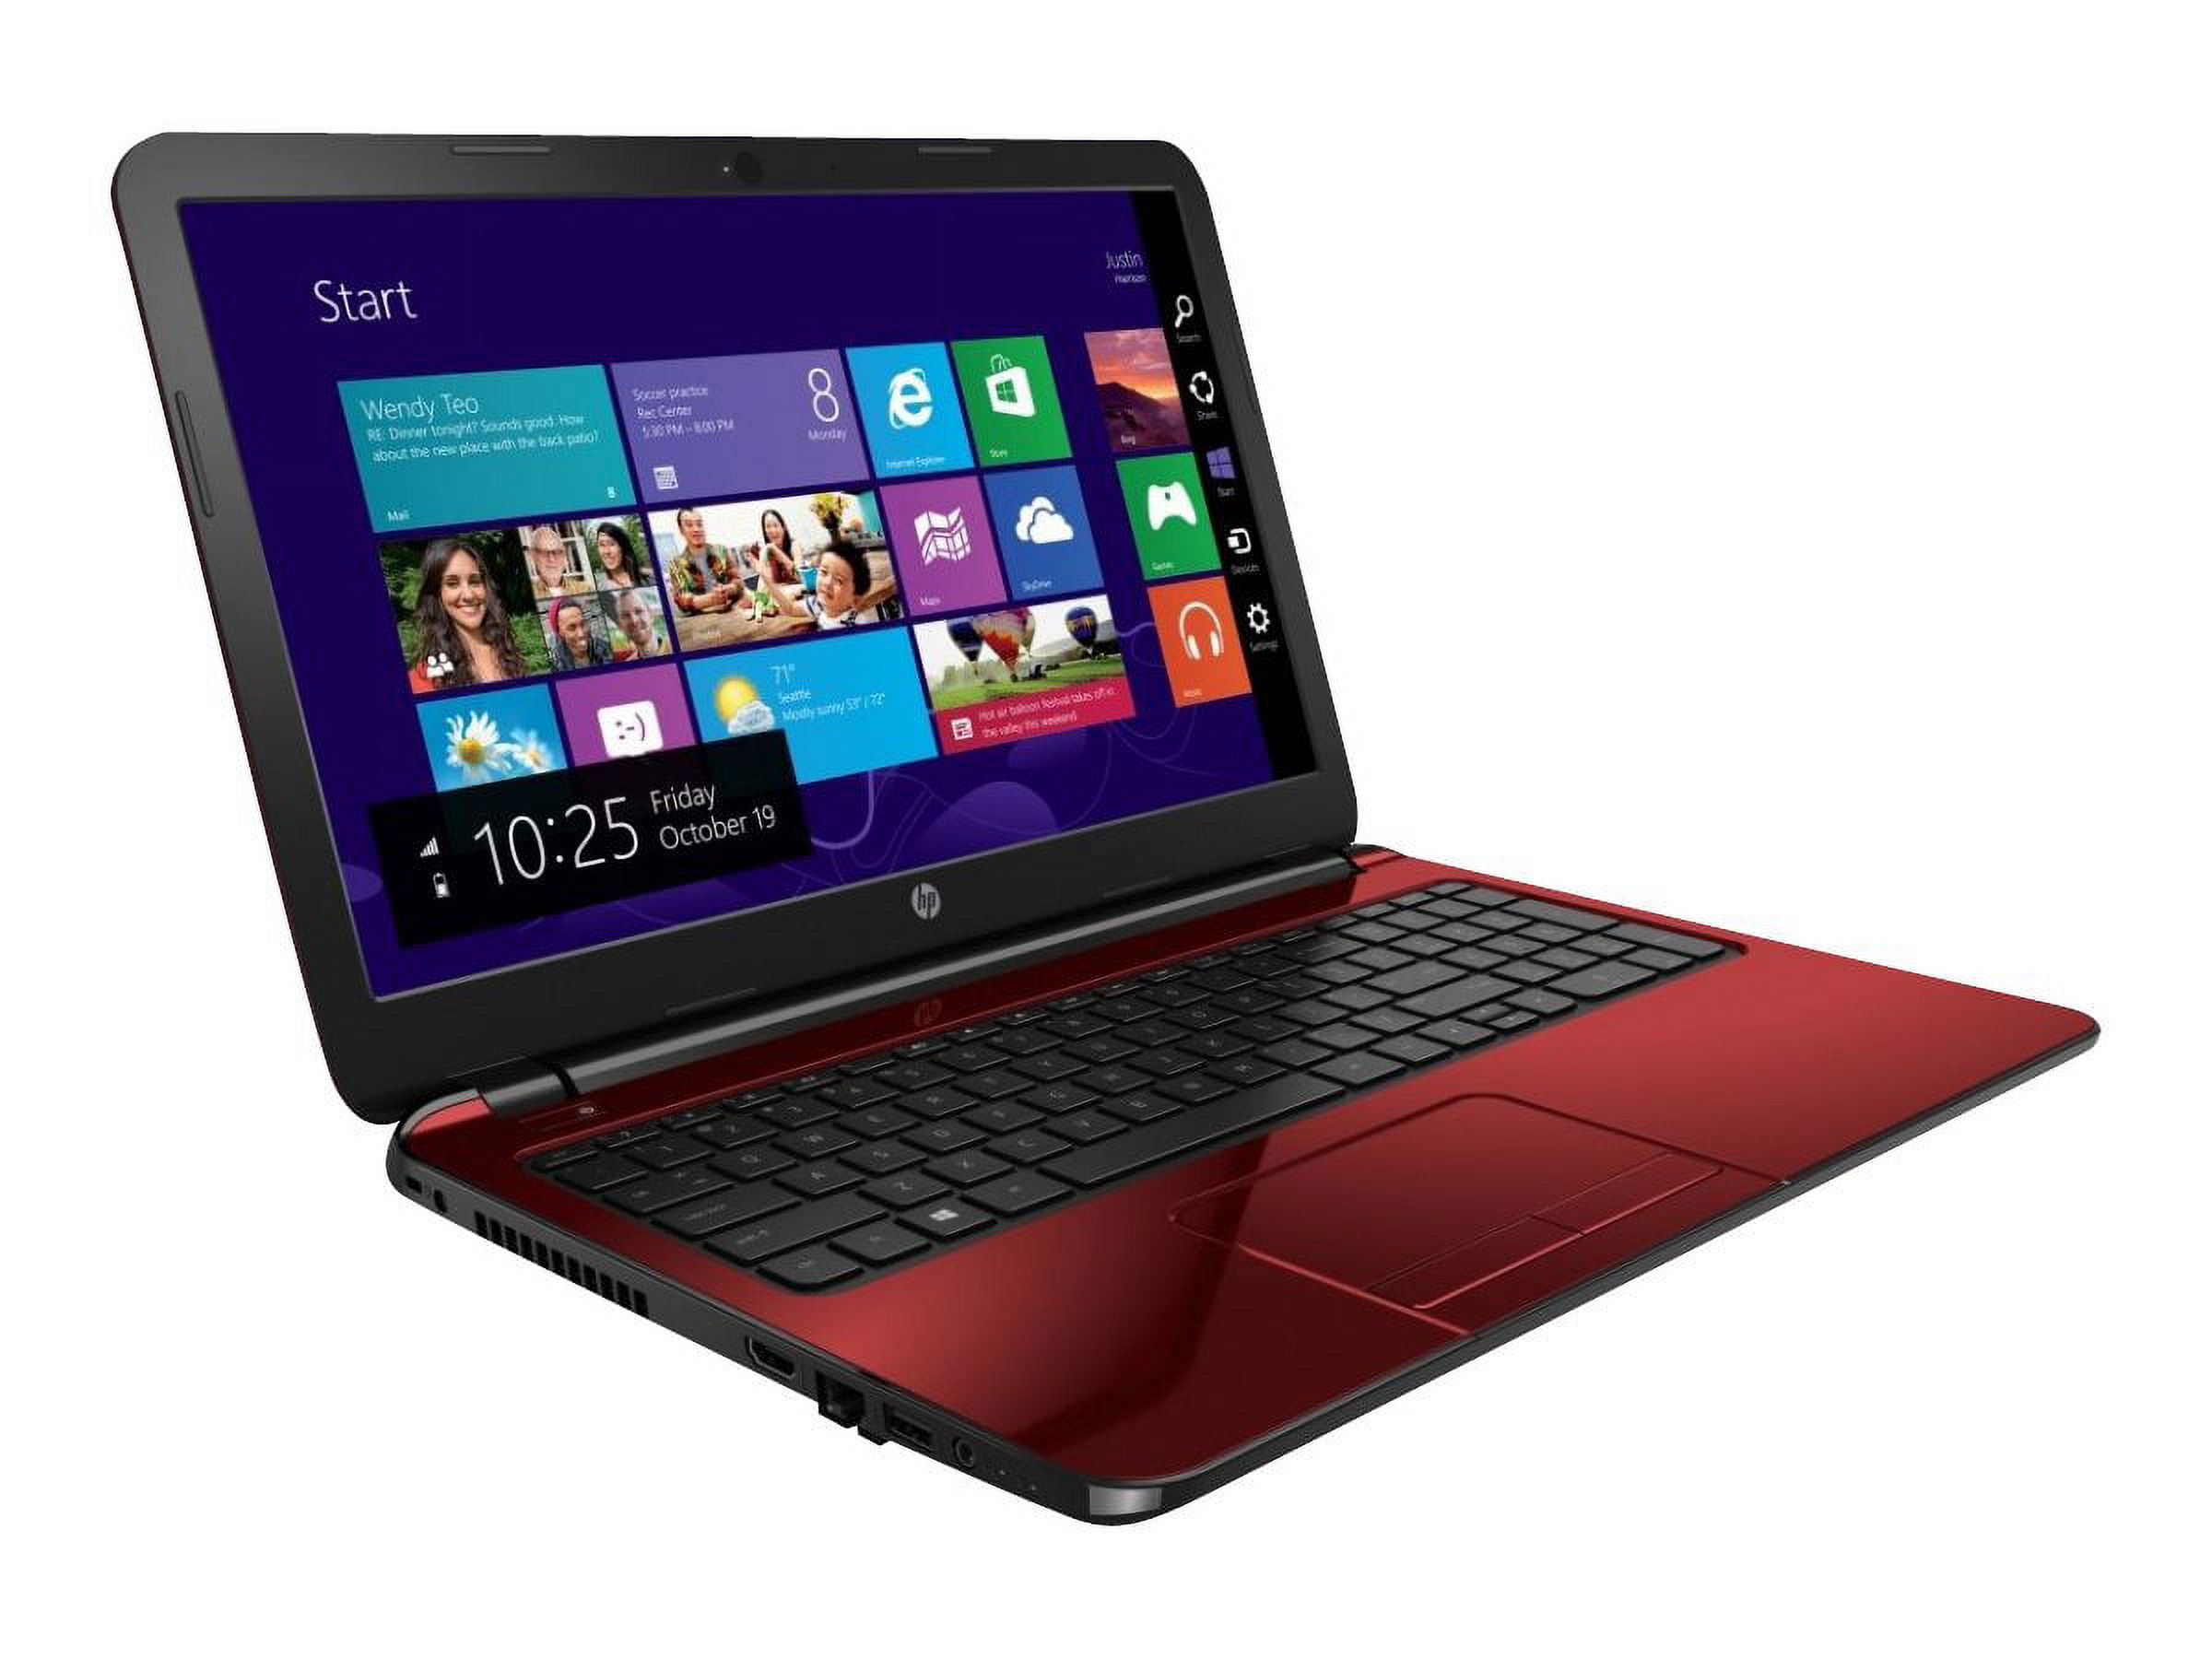 HP Laptop 15-R132wm - Intel Pentium N3540 / 2.16 GHz - Win 8.1 64-bit - HD Graphics - 4 GB RAM - 500 GB HDD - DVD SuperMulti - 15.6" 1366 x 768 (HD) - flyer red - image 1 of 7